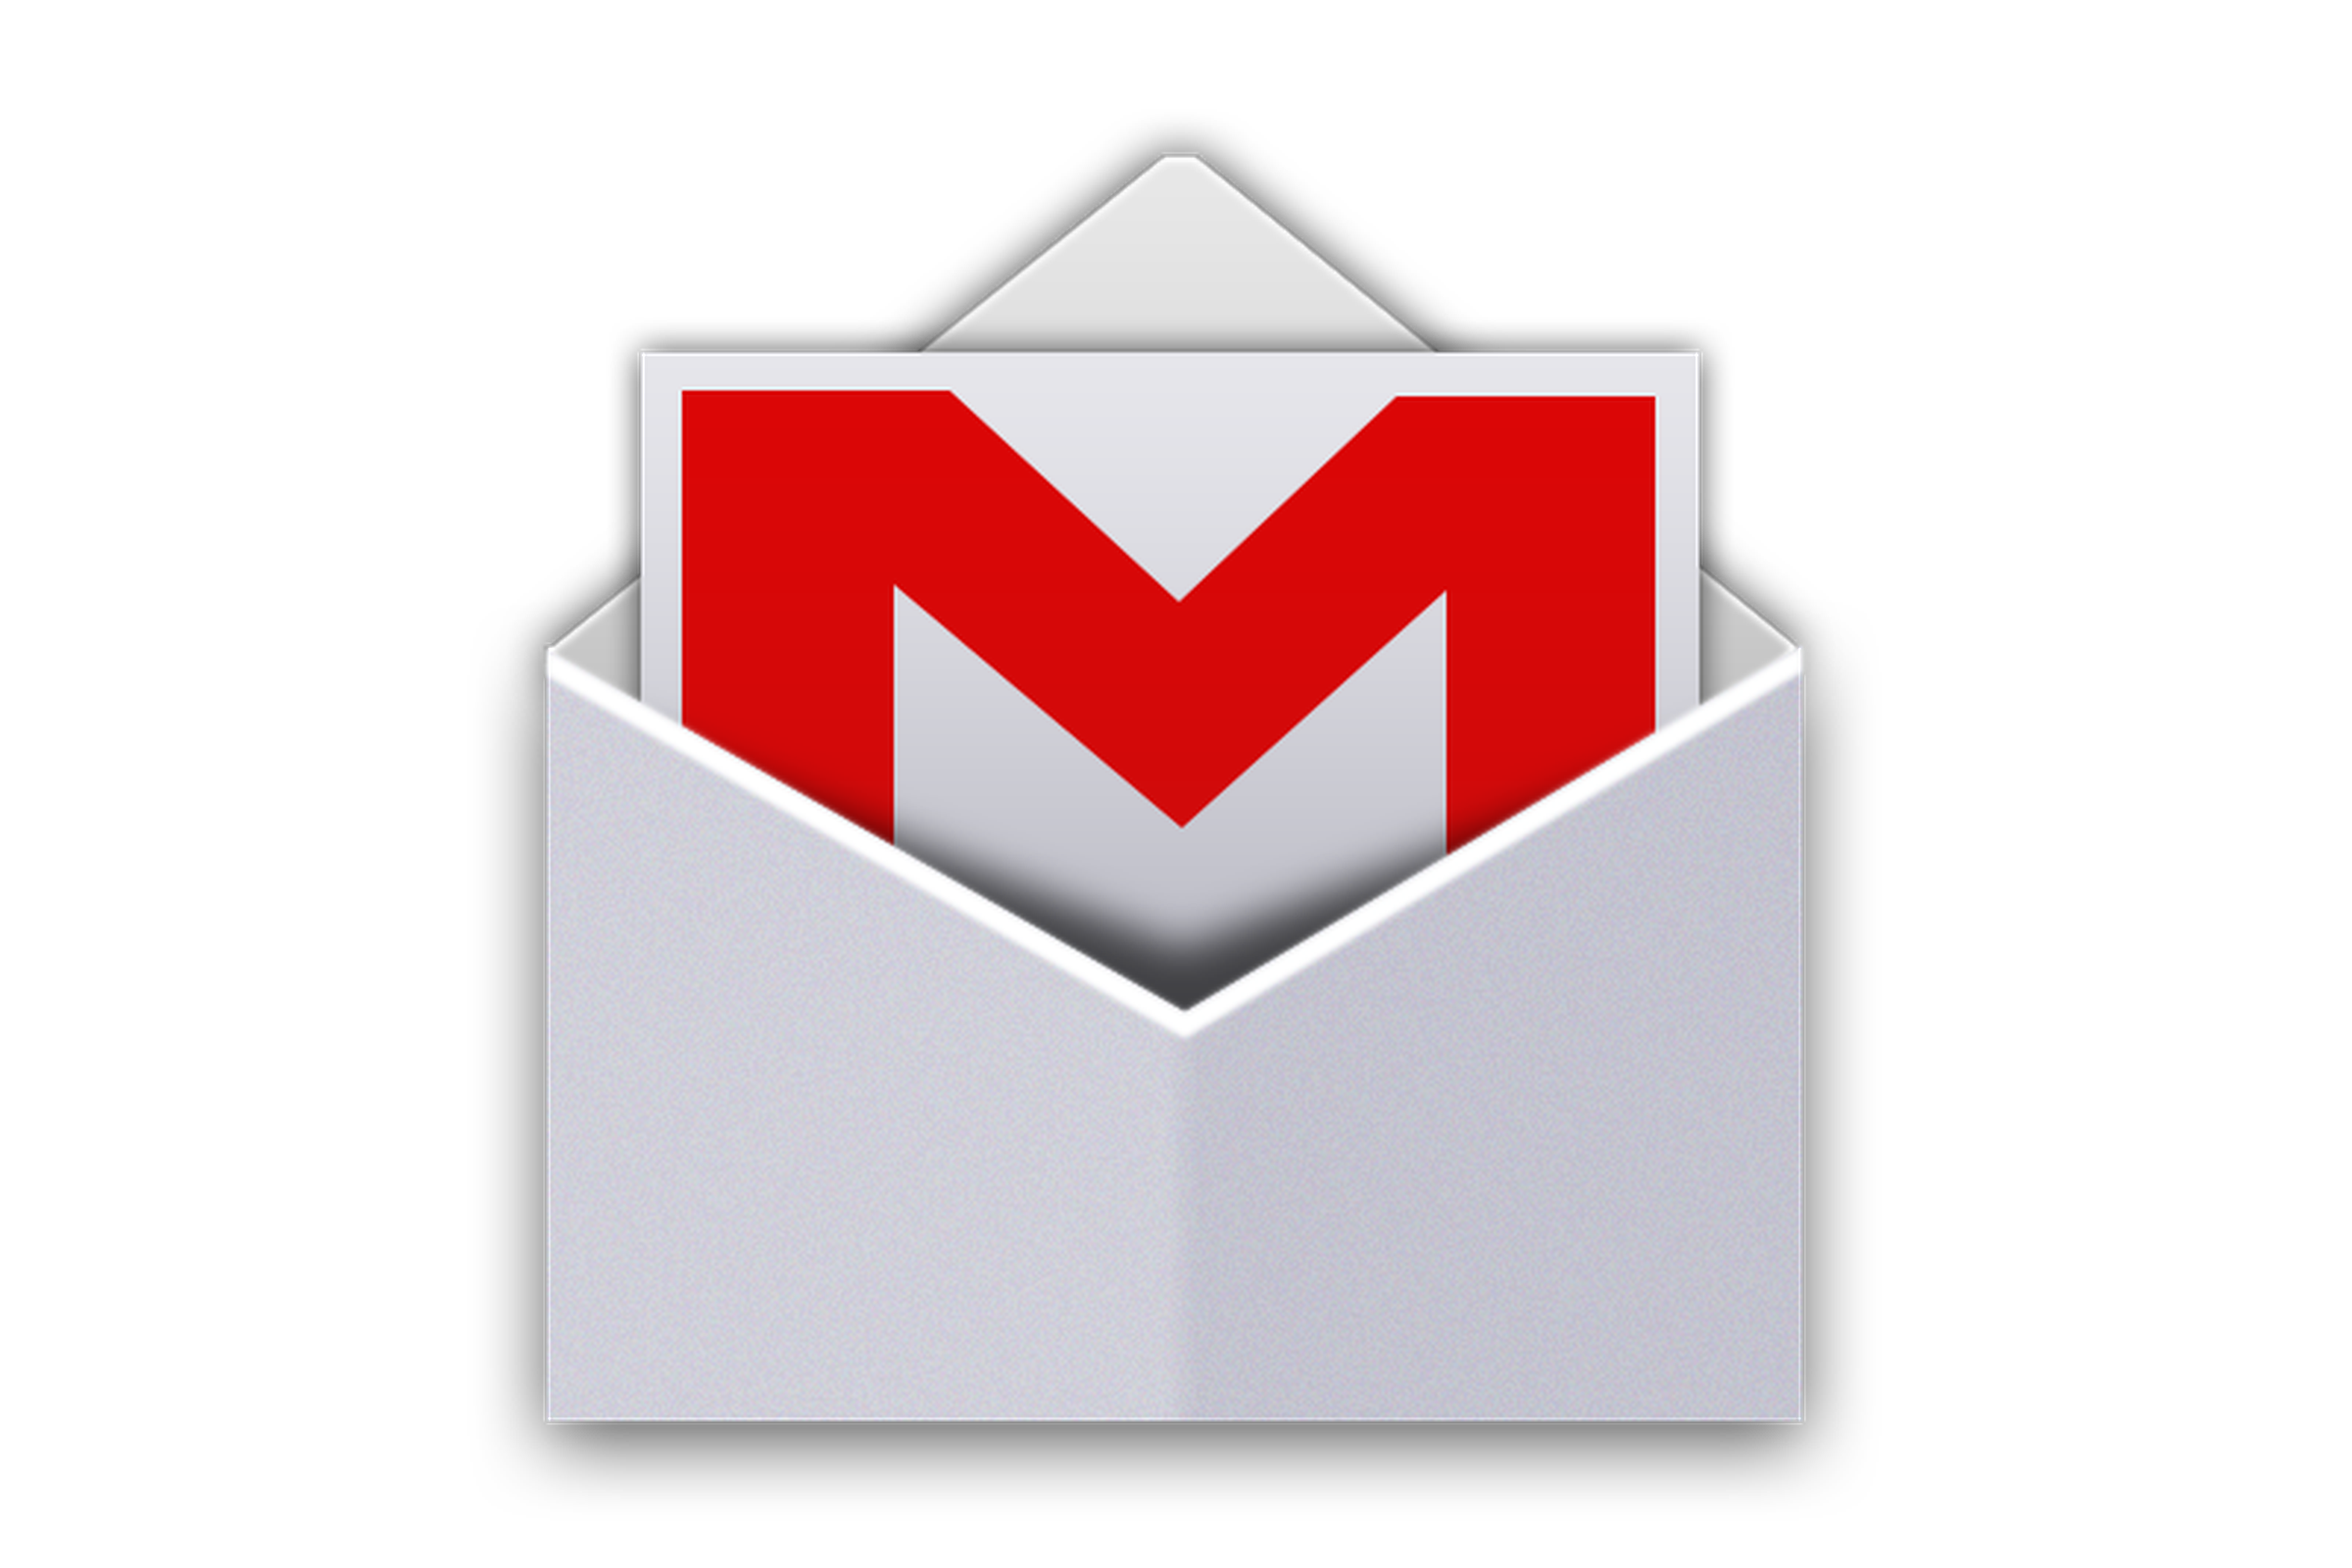 F gmail com. Gmail логотип. Значок гугл почты. Gmail логотип PNG.